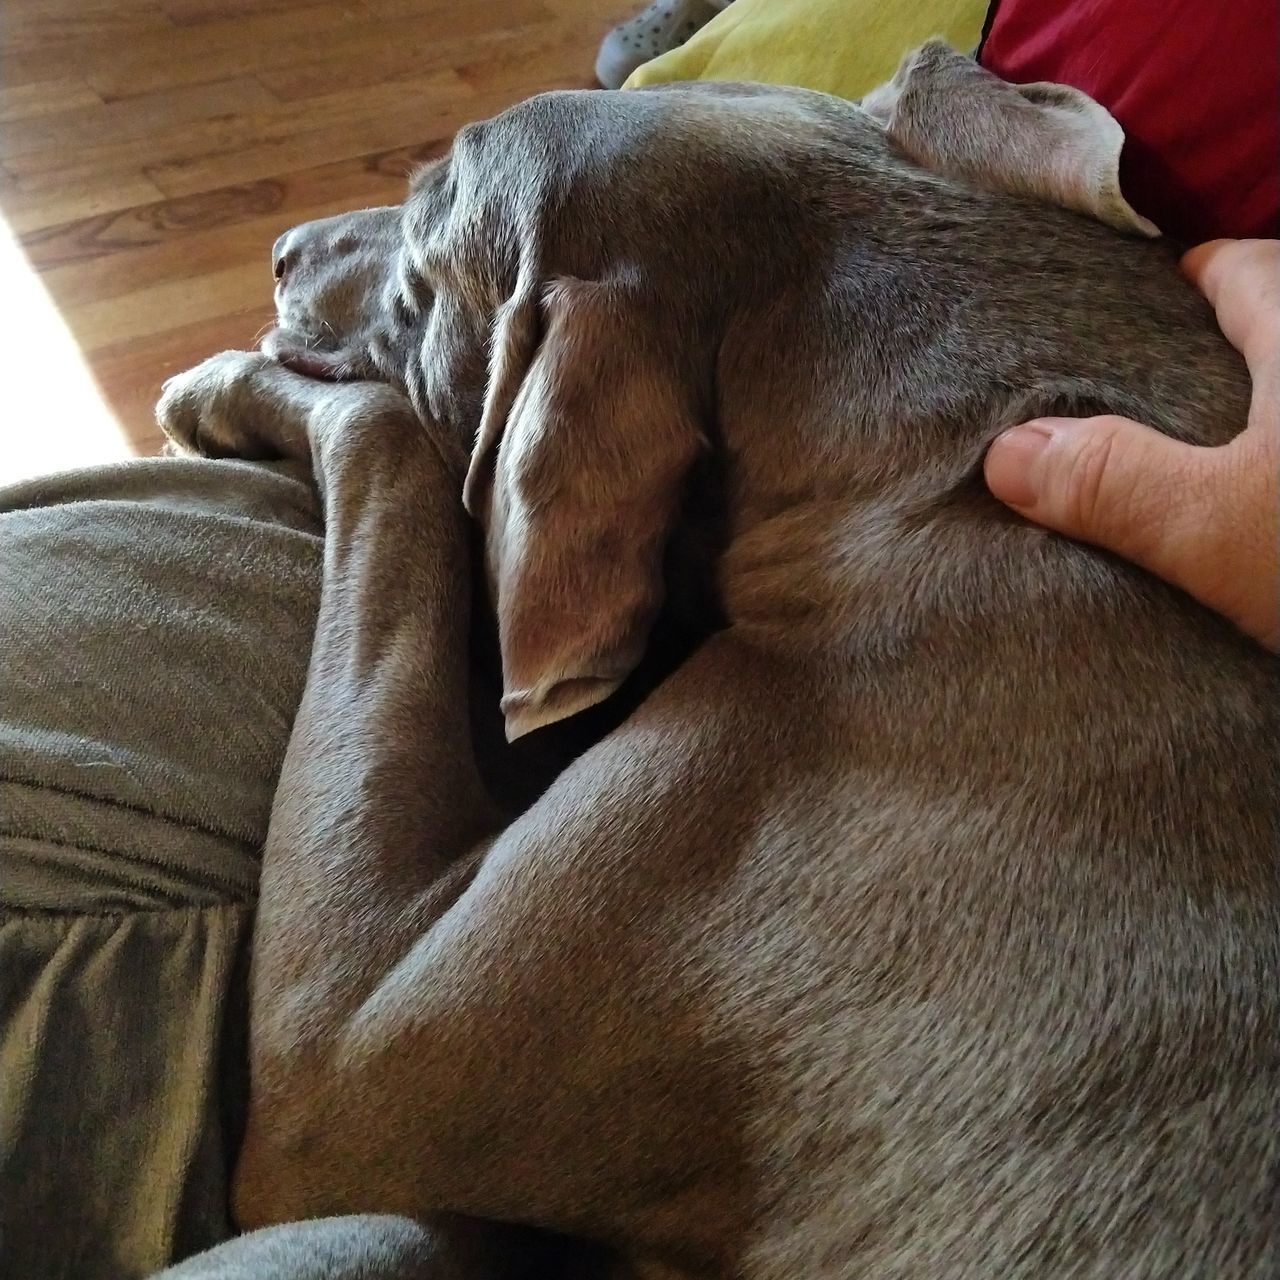 CLOSE-UP OF A DOG SLEEPING ON HAND